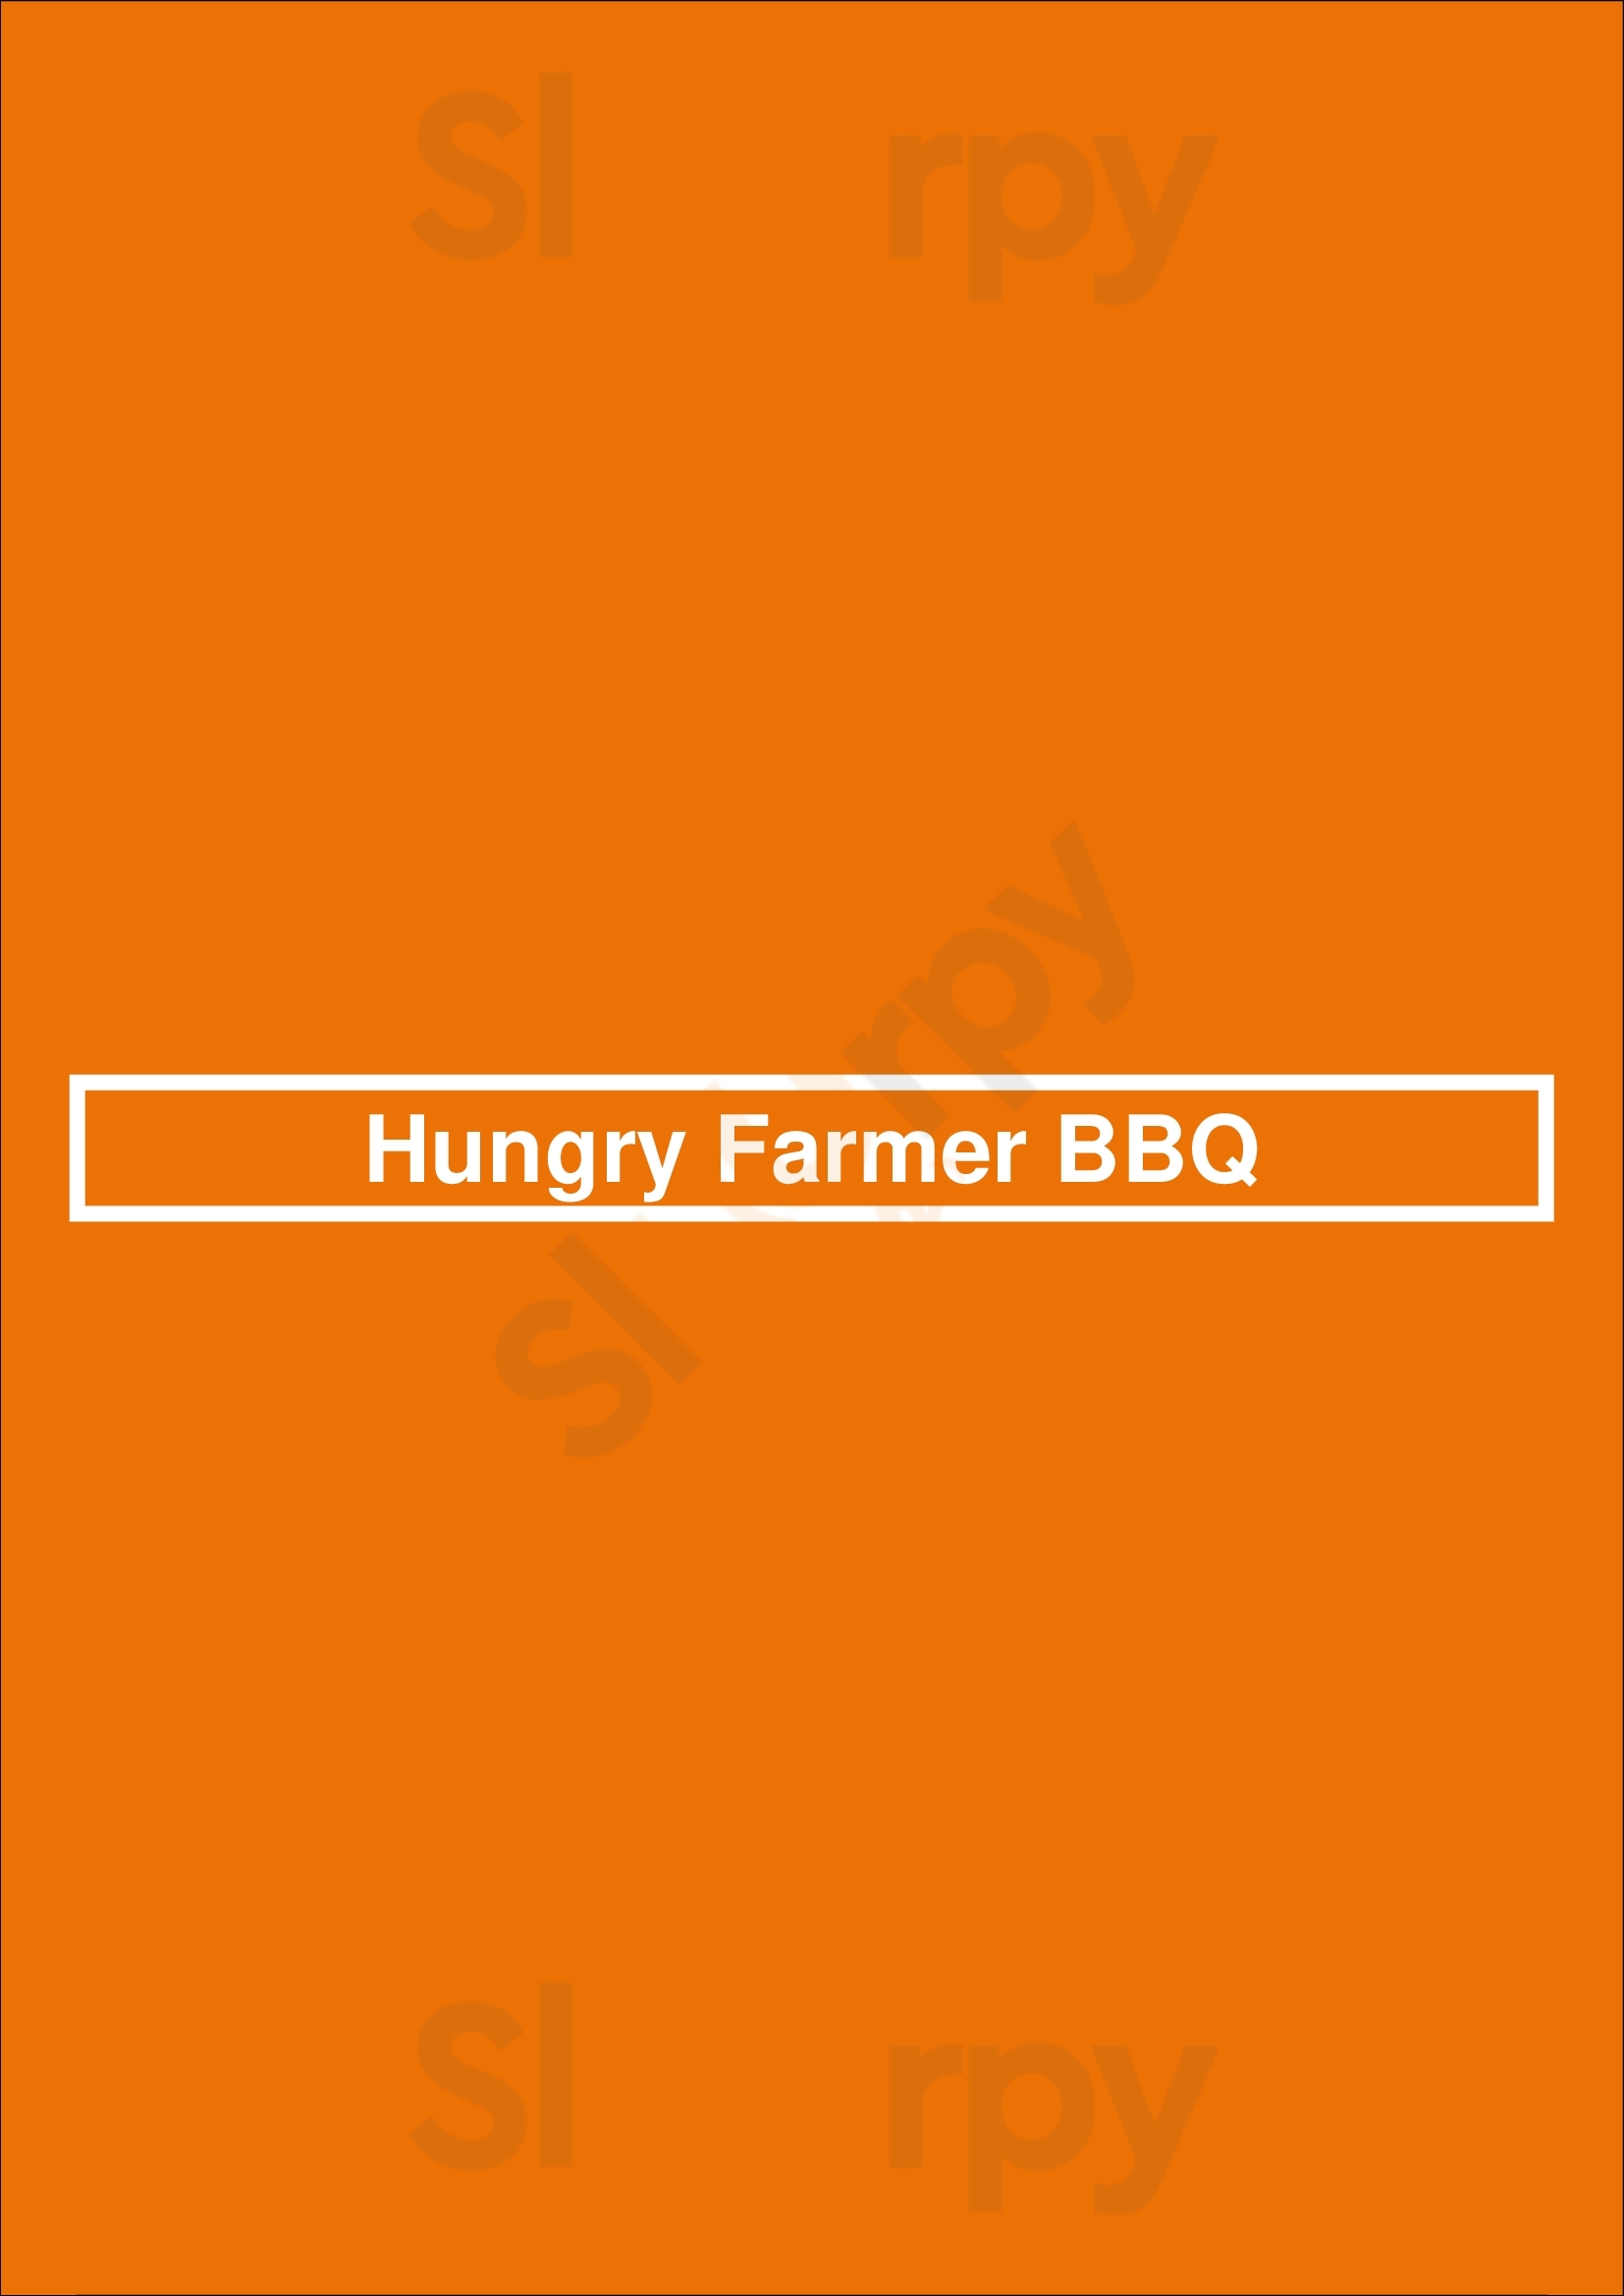 Hungry Farmer Bbq Houston Menu - 1